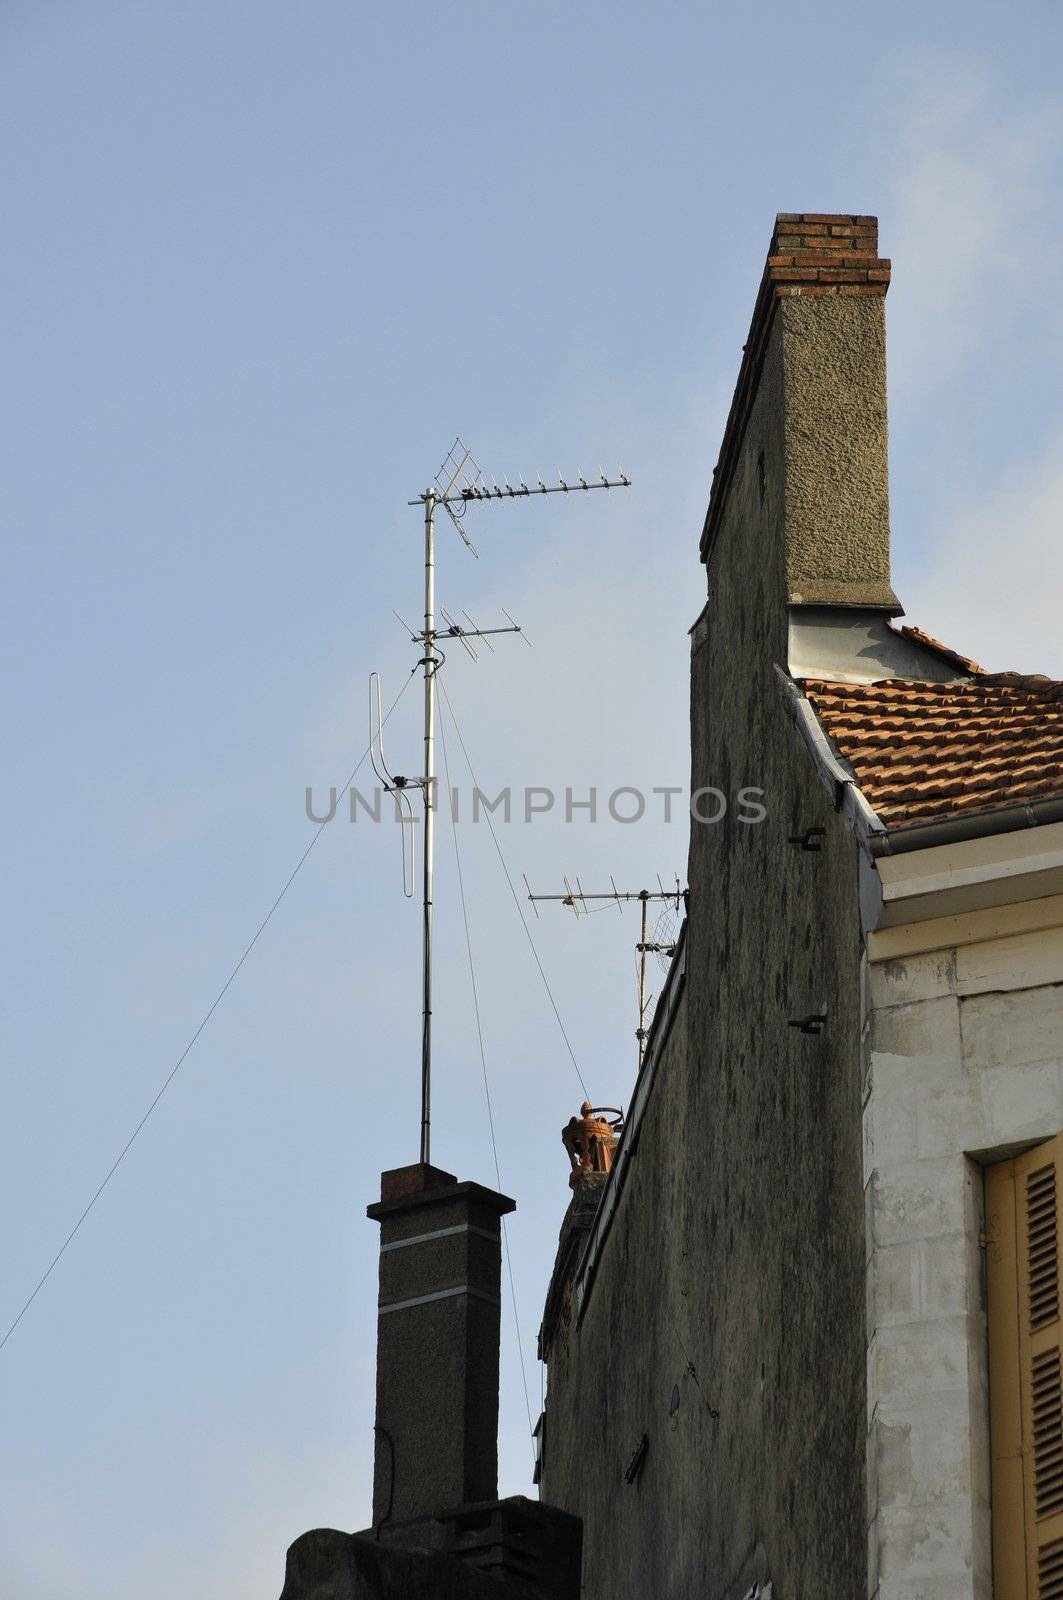 TV antenna on a chimney